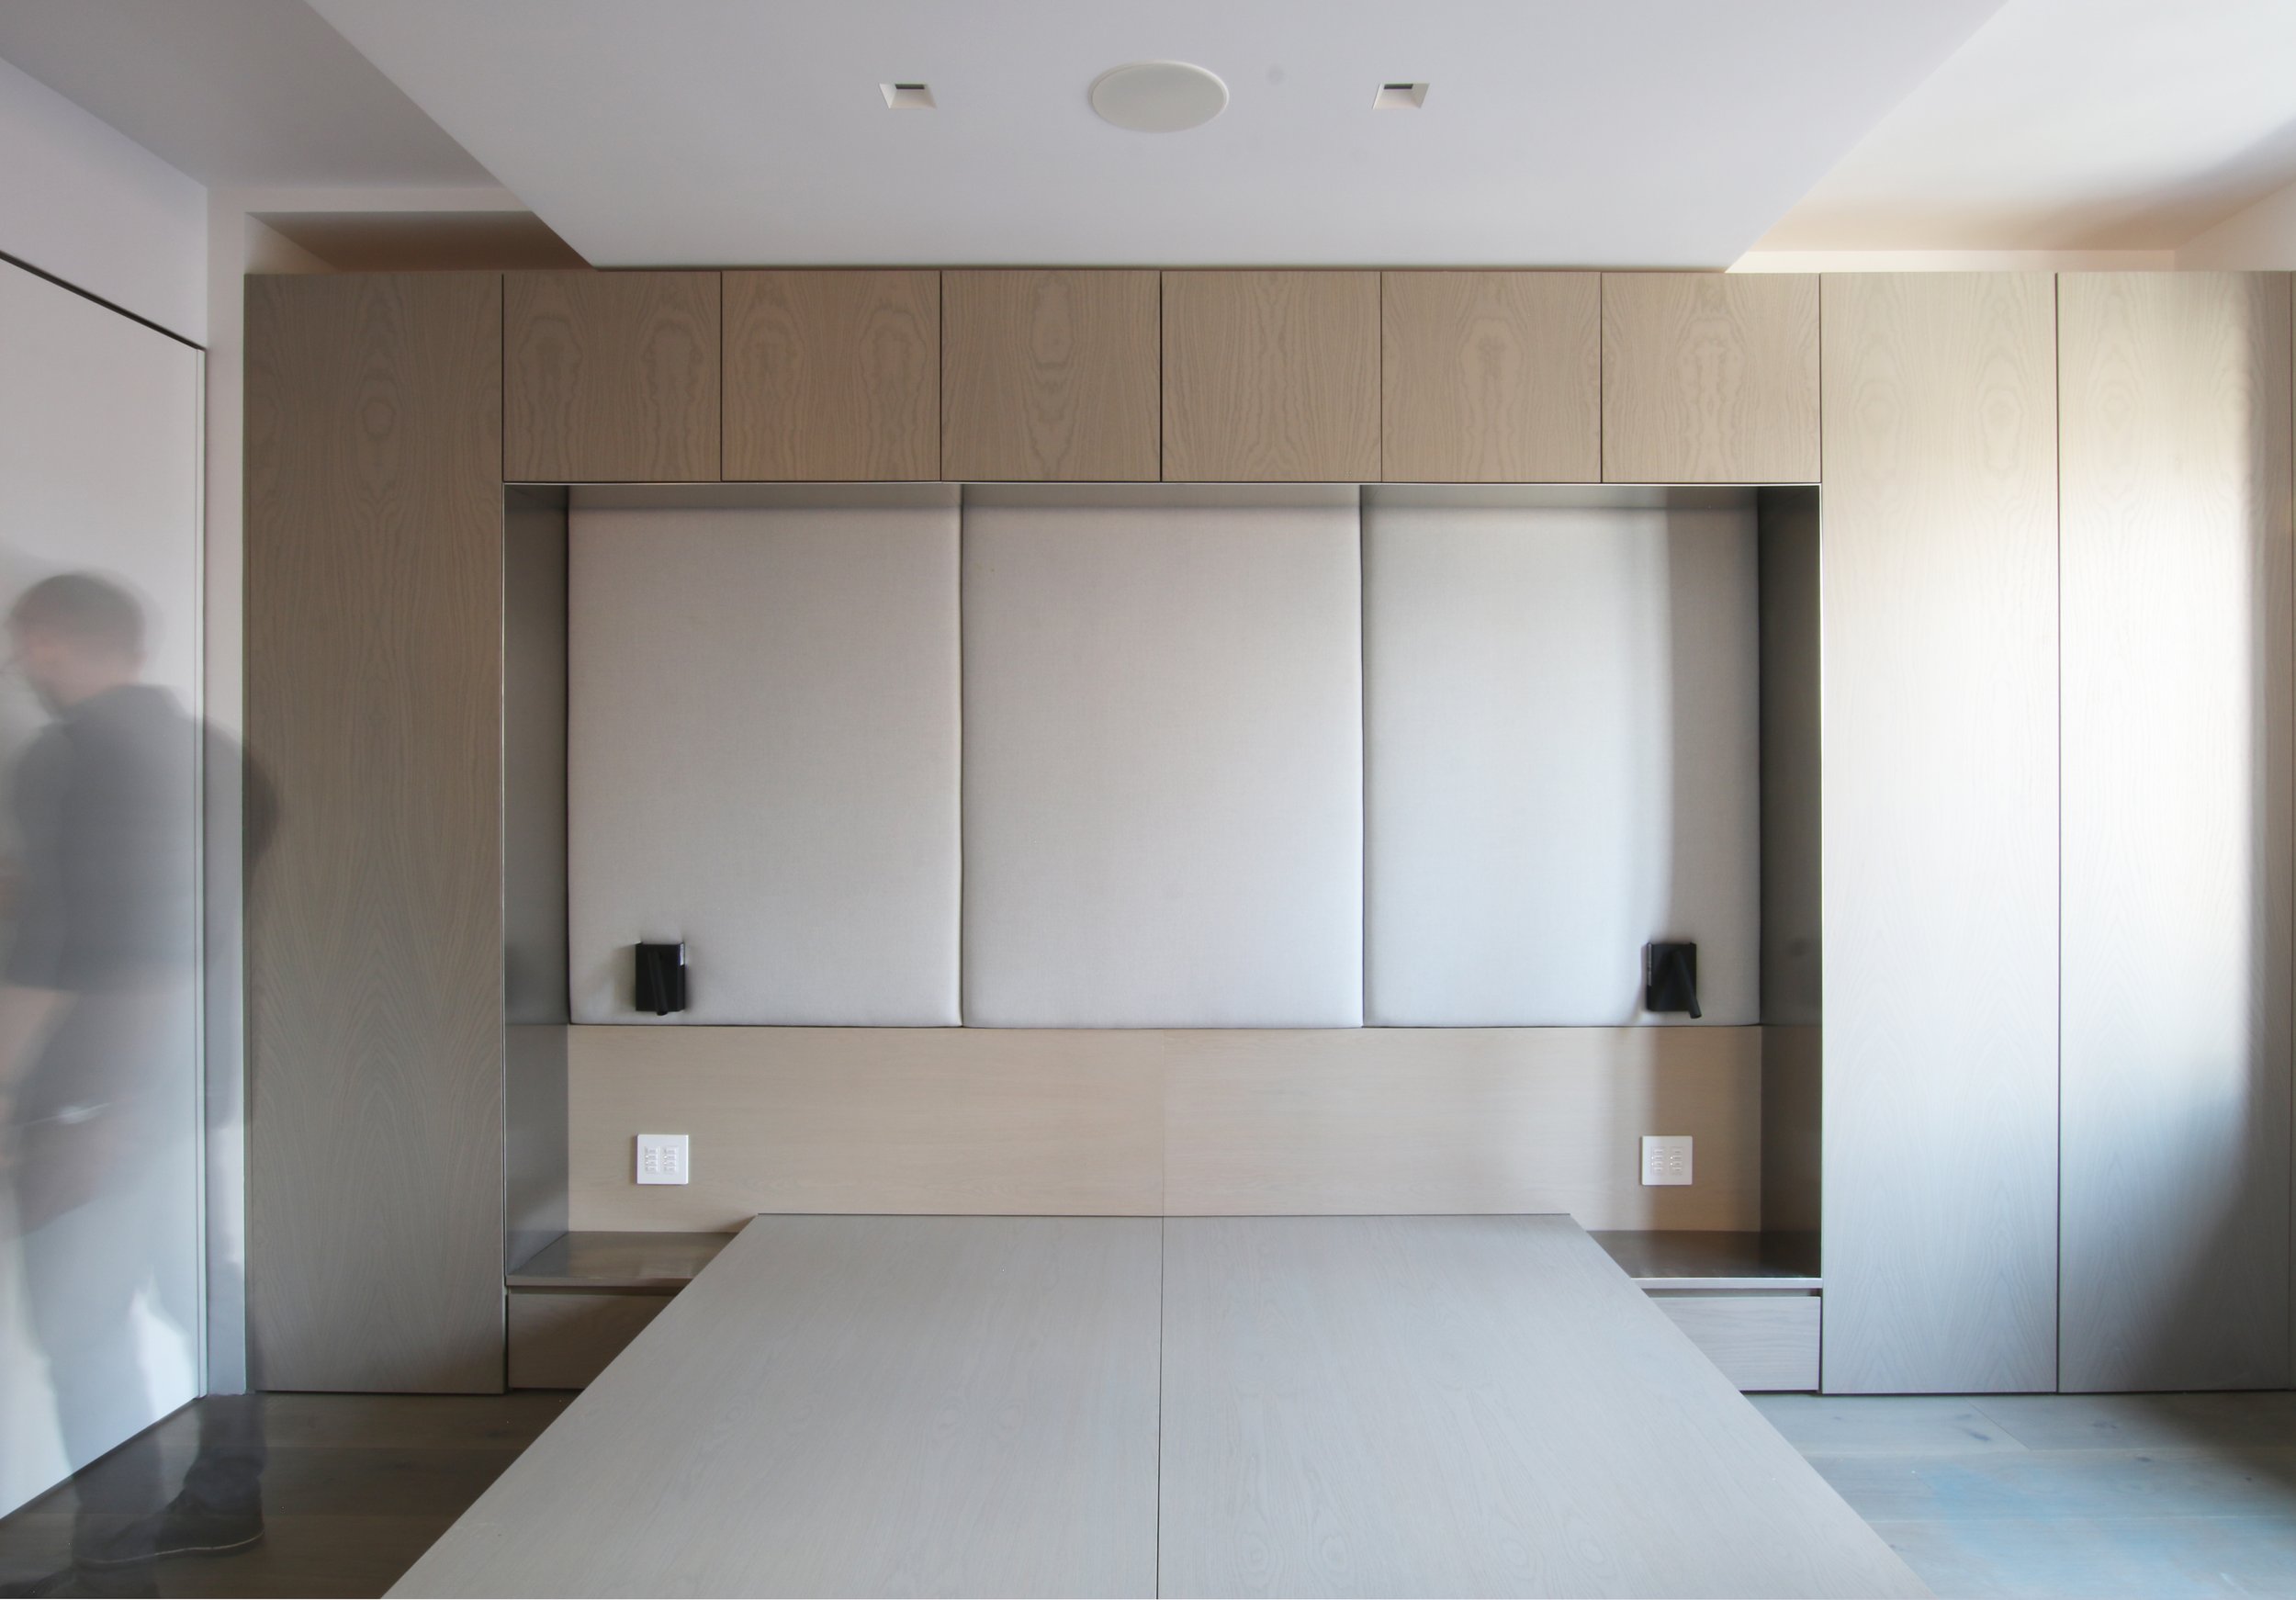 res4-resolution-4-architecture-park-avenue-apartment-interior-master-bedroom-custom.jpg